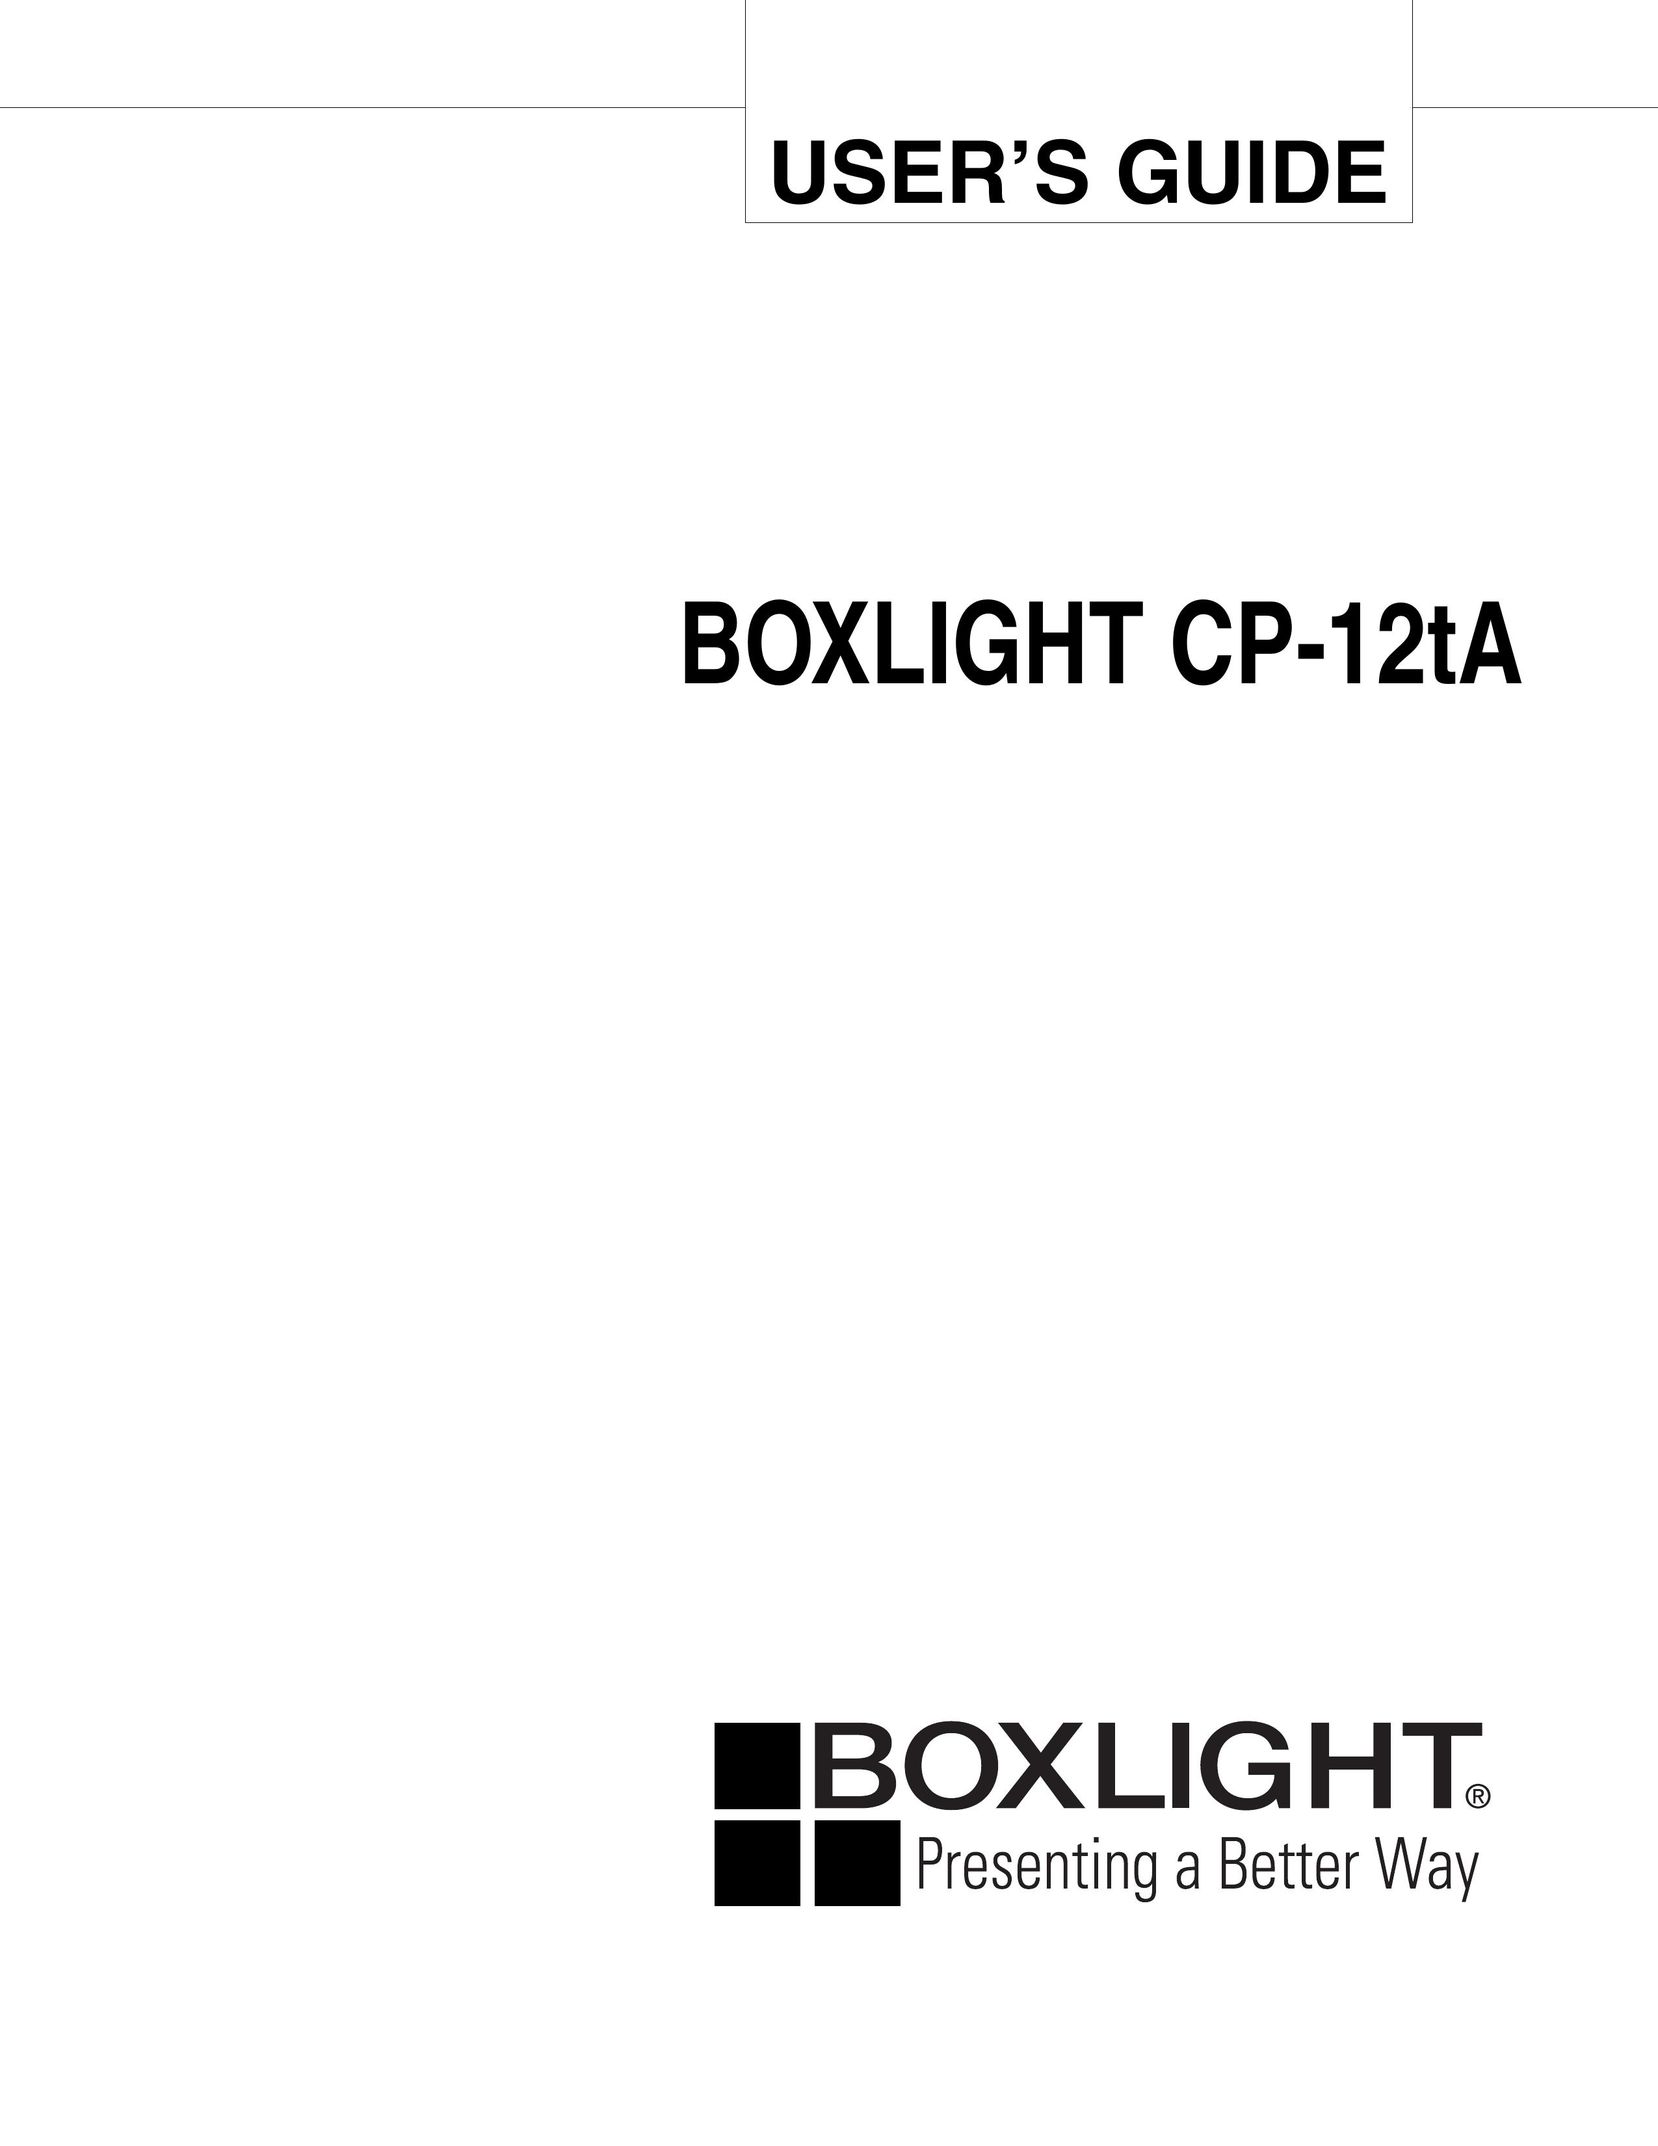 BOXLIGHT CP-12tA Projector User Manual